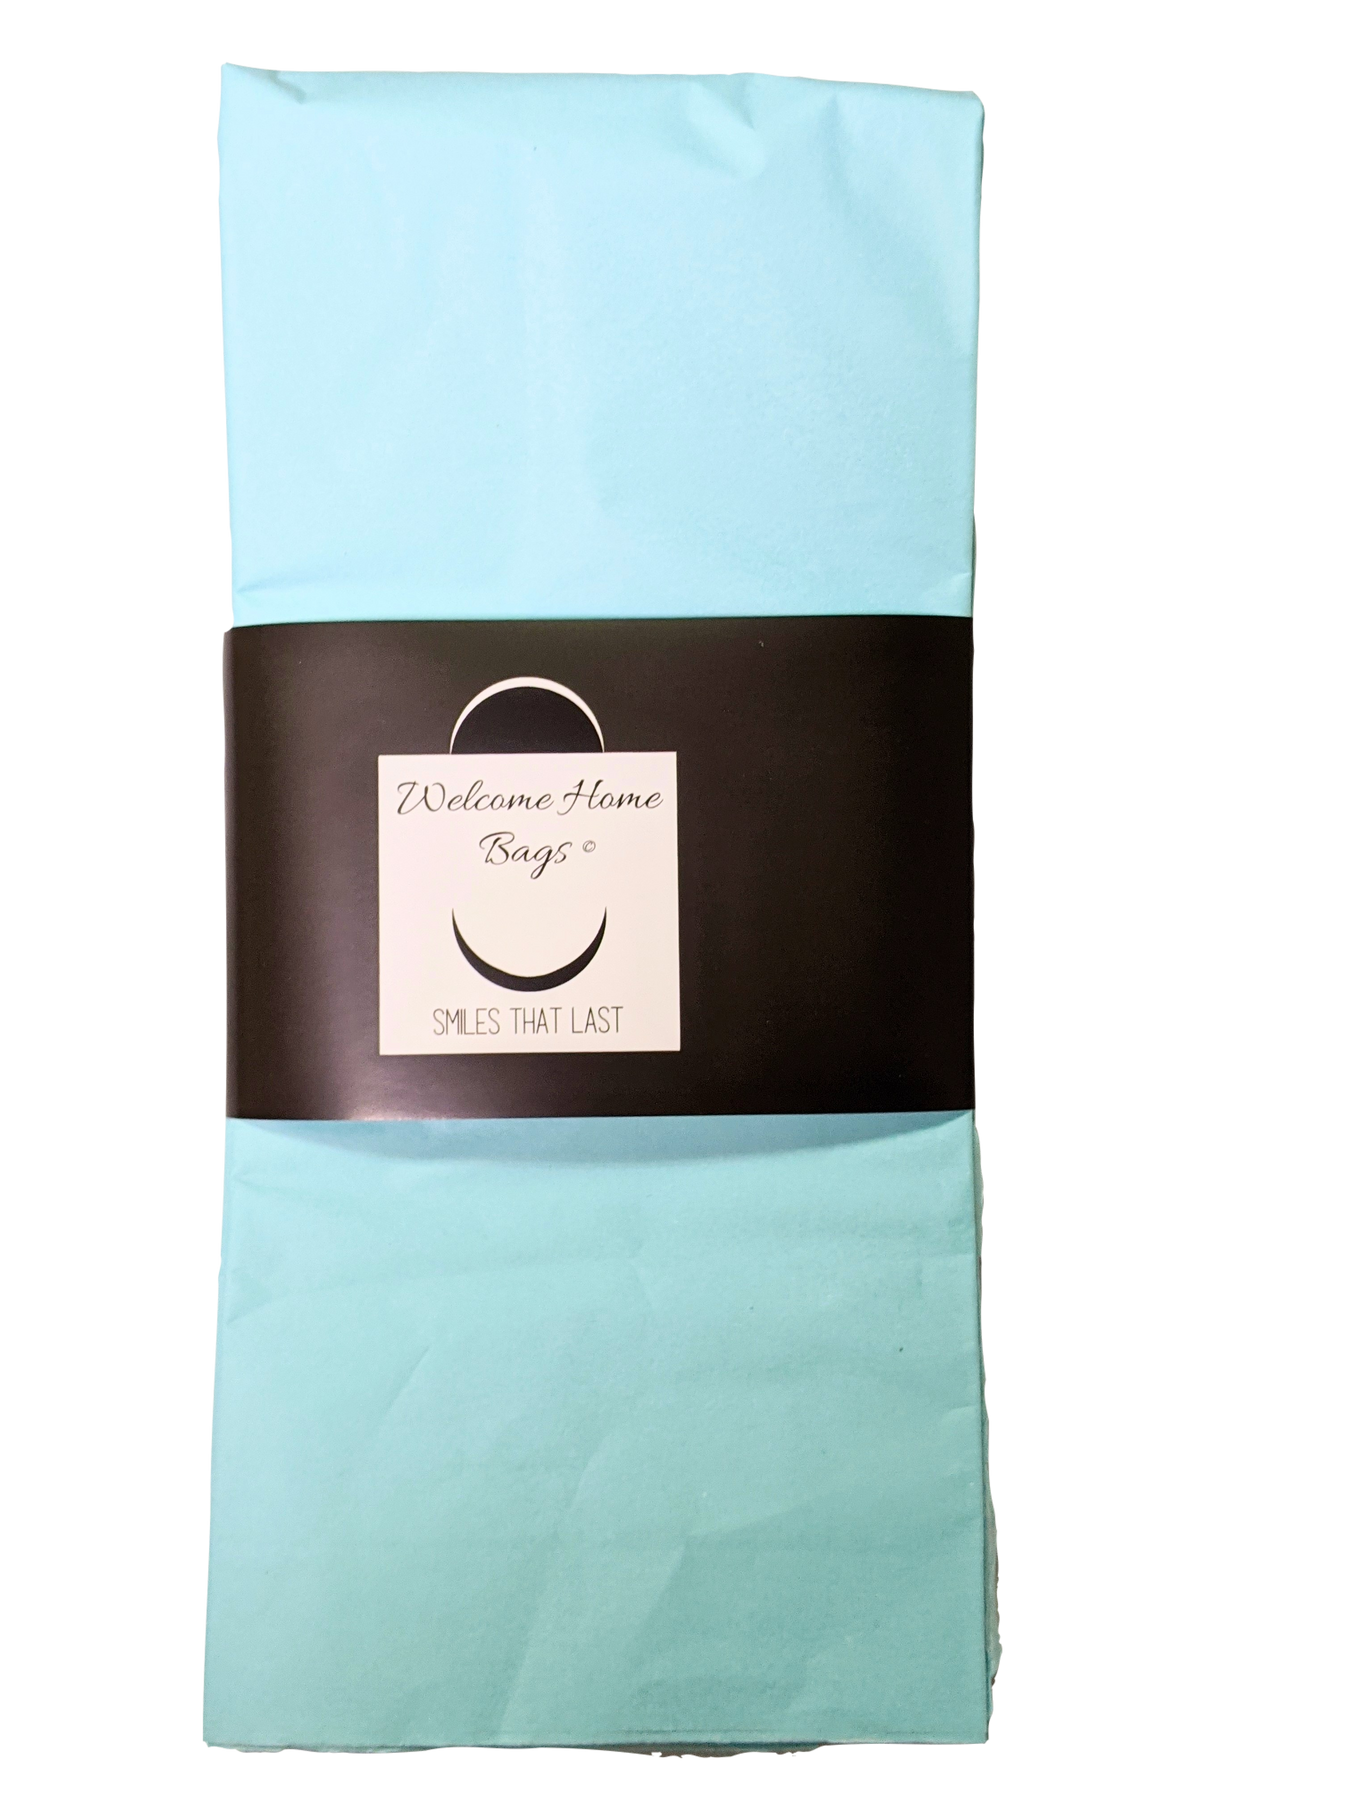 Gift Shoe Clothes Universal Wrap Sydney Tissue Paper - Brilliant Promos -  Be Brilliant!